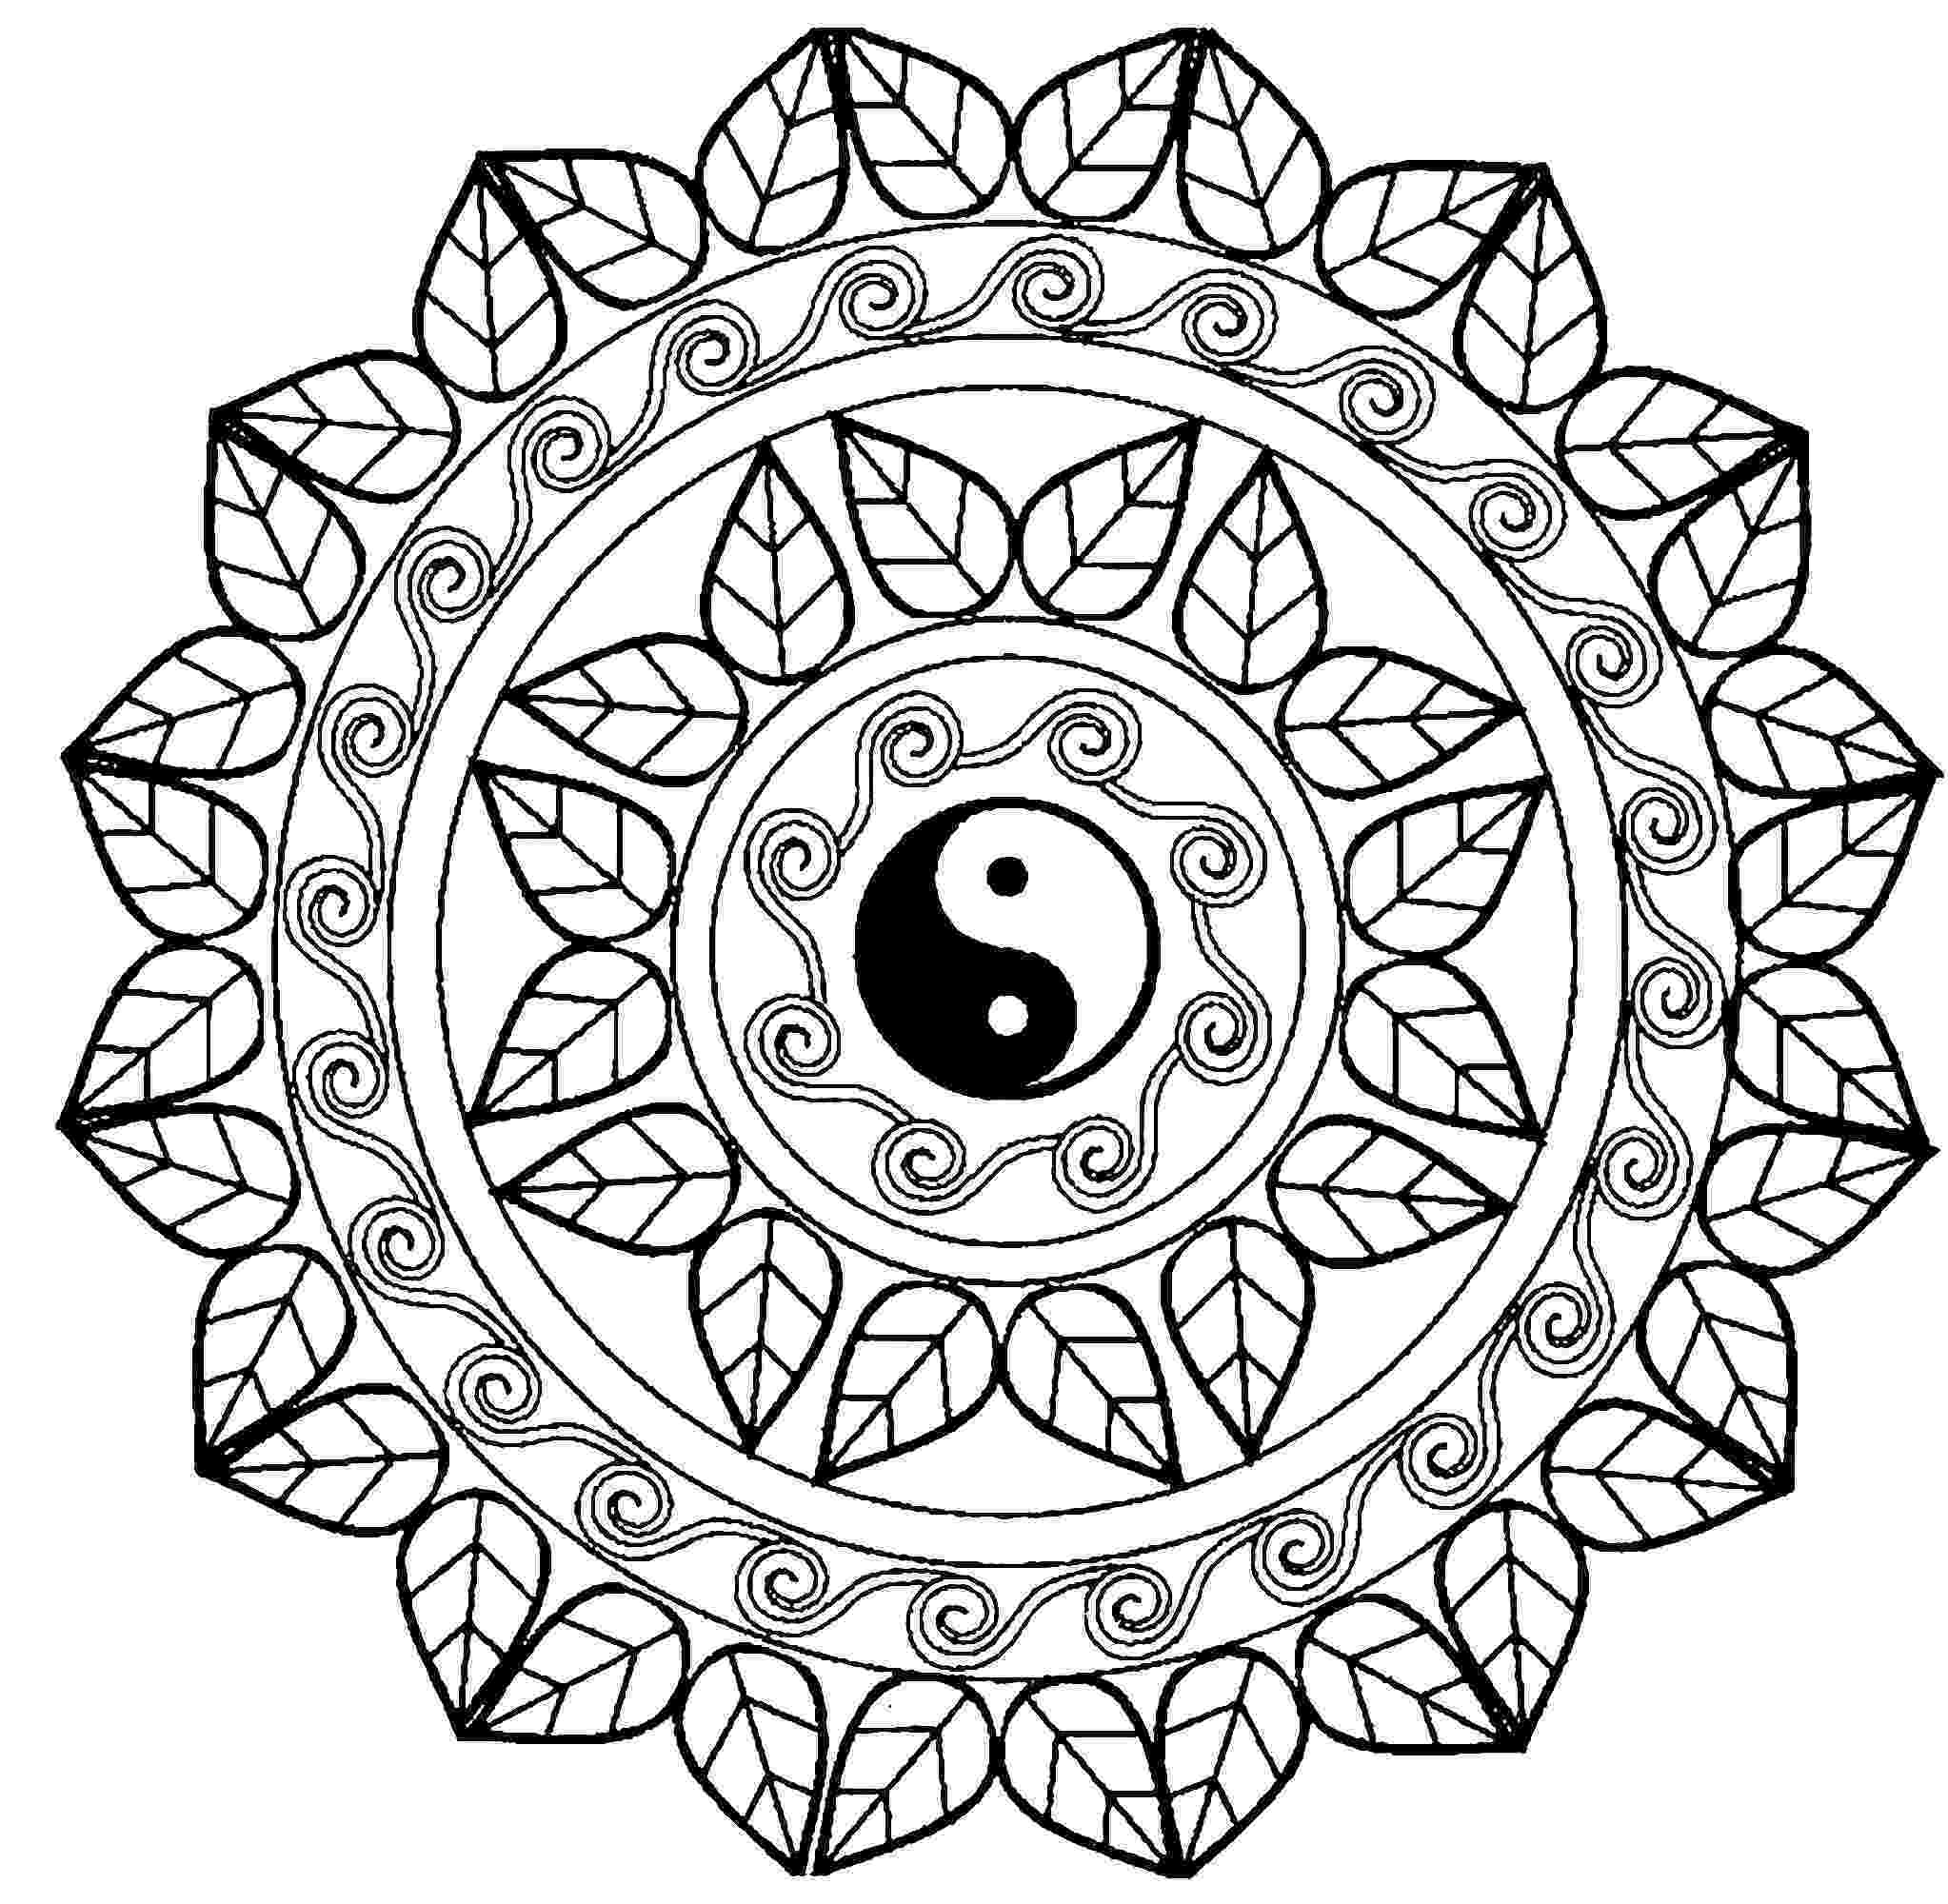 cool mandalas yin yang mandala with cool leaves designs difficult mandalas cool 